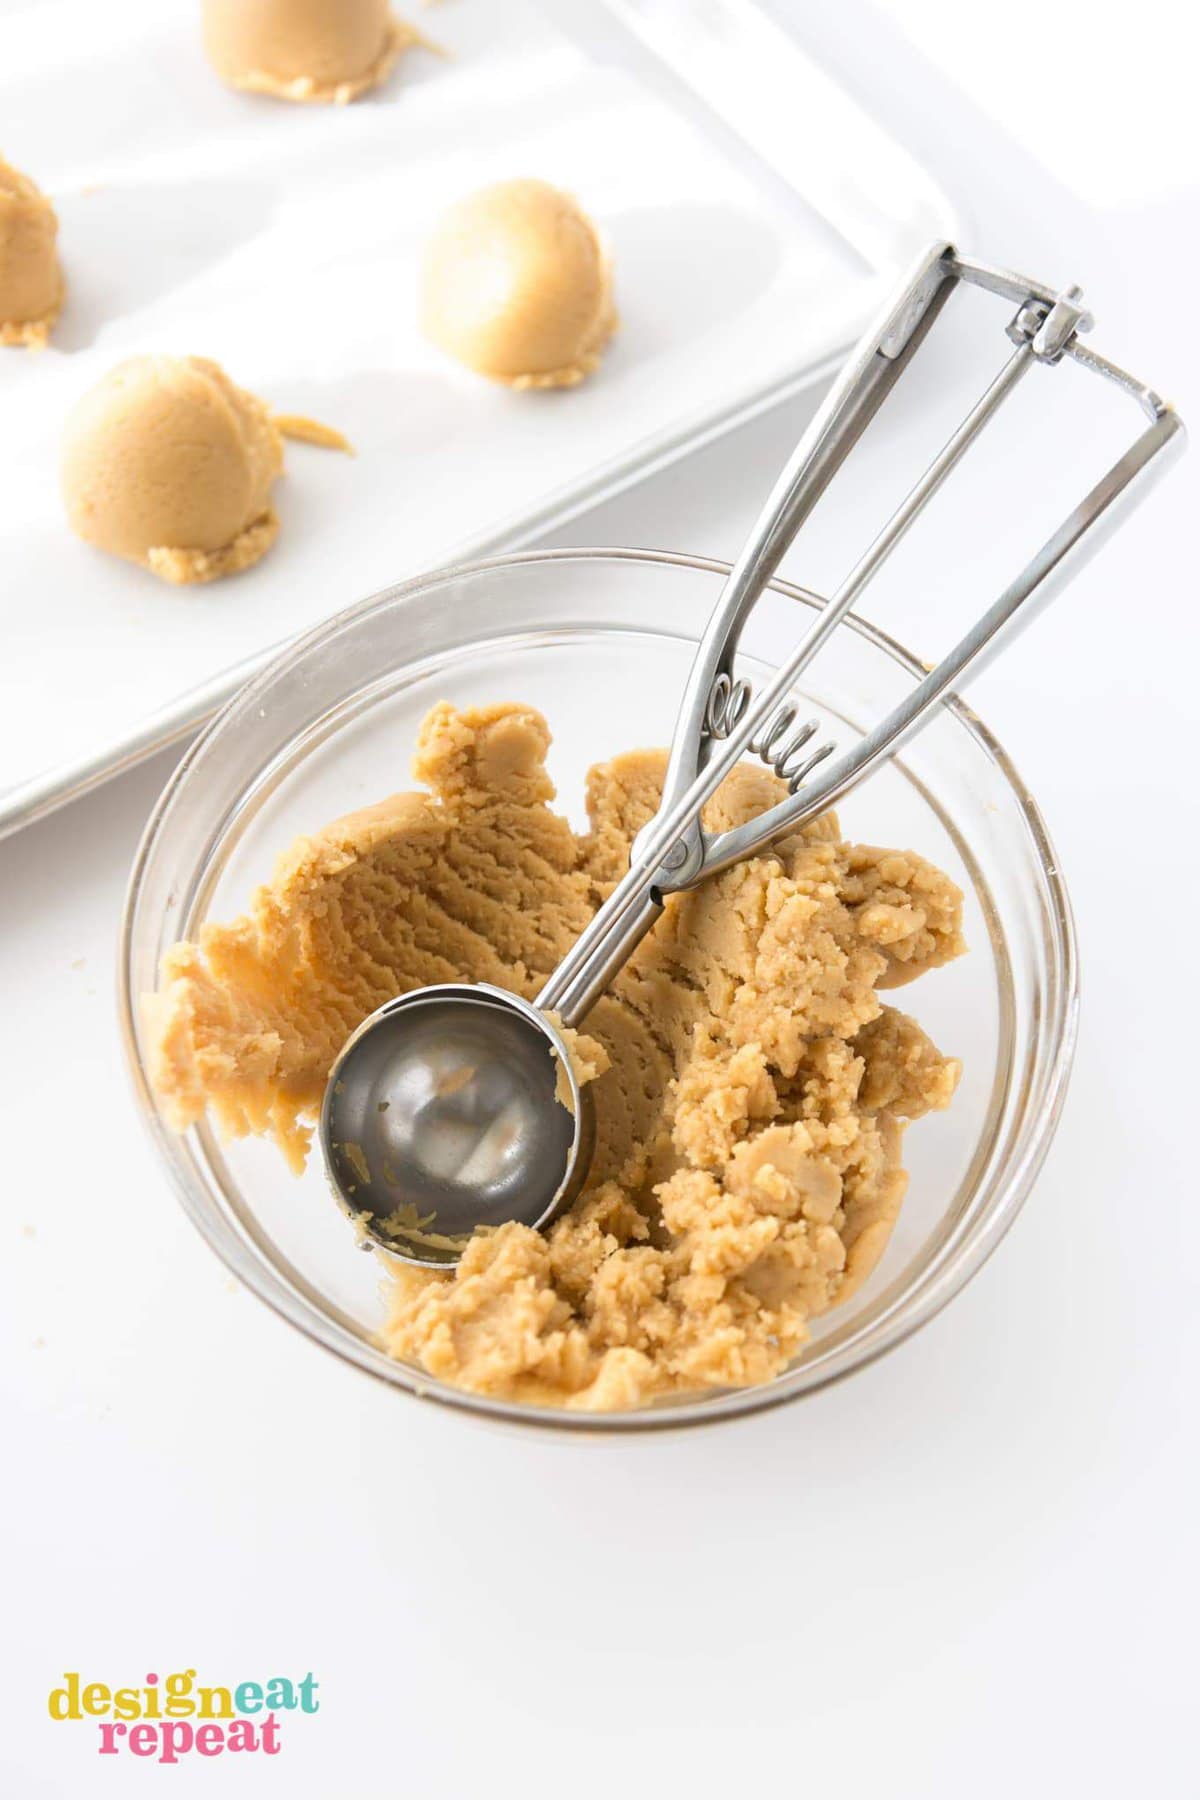 Metal scoop in bowl of peanut butter cookie dough.